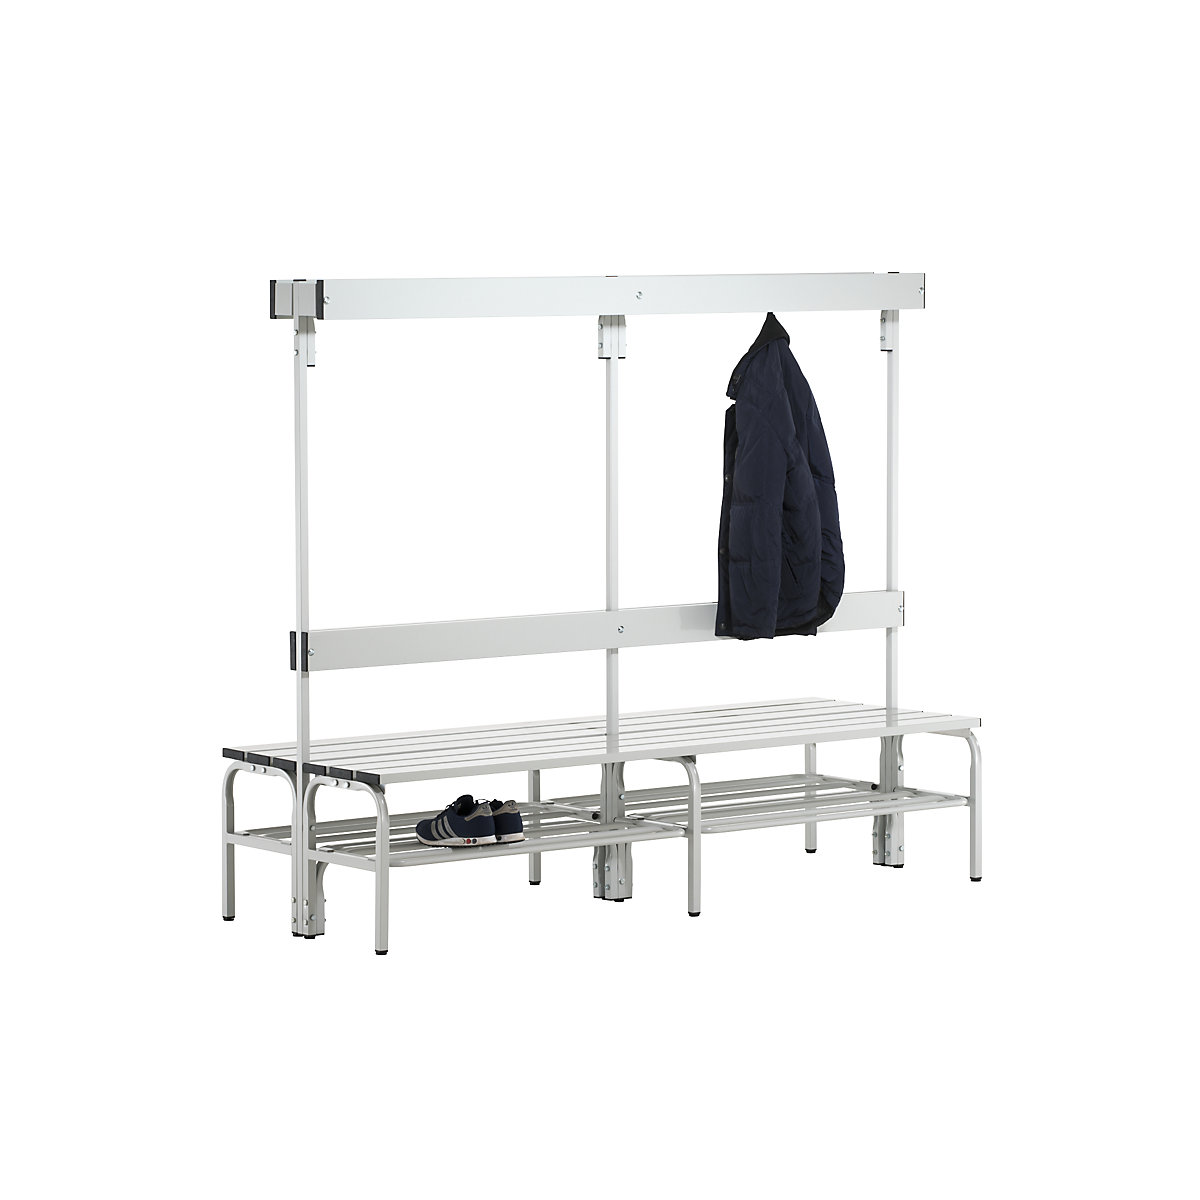 Sypro – Changing room bench with aluminium slats (Product illustration 11)